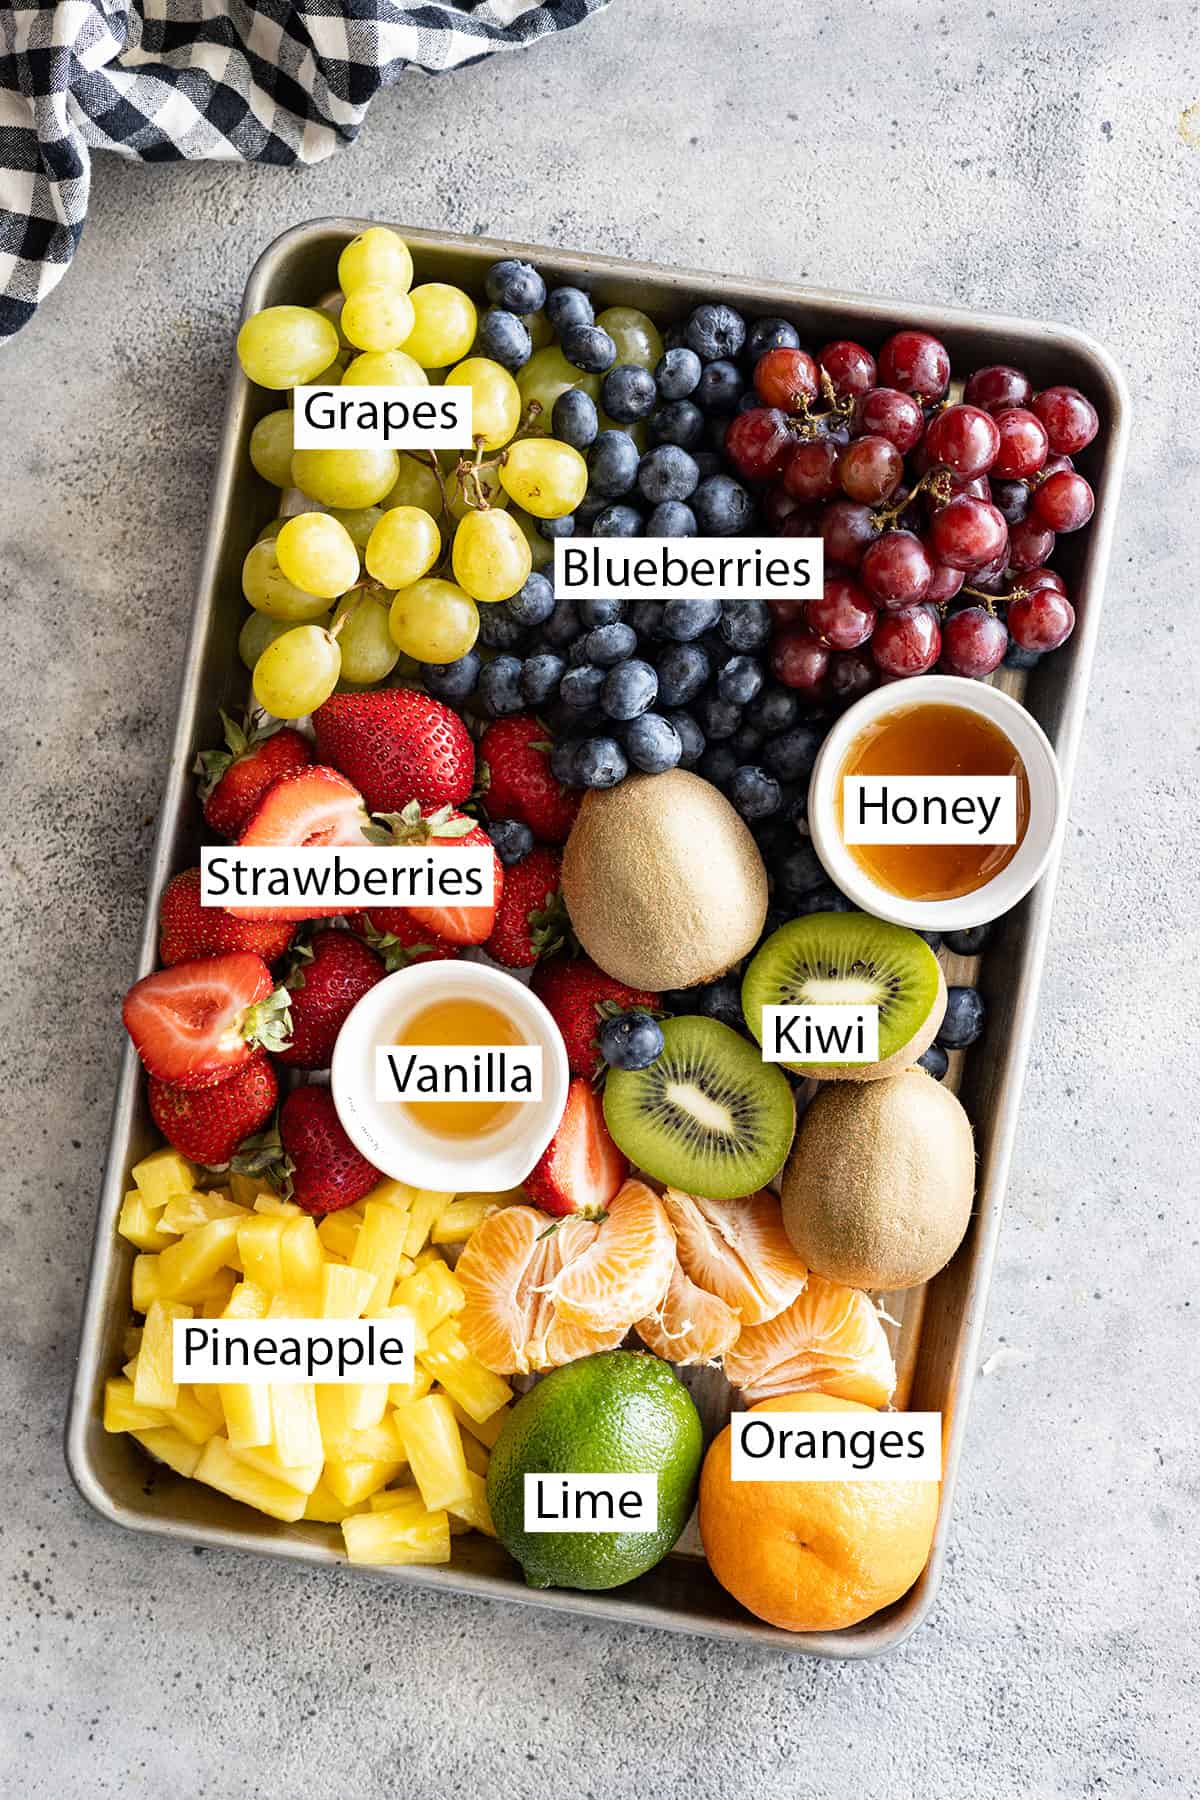 Ingredients: grapes, blueberries, strawberries, kiwi, oranges, pineapple, lime, honey, and vanilla.